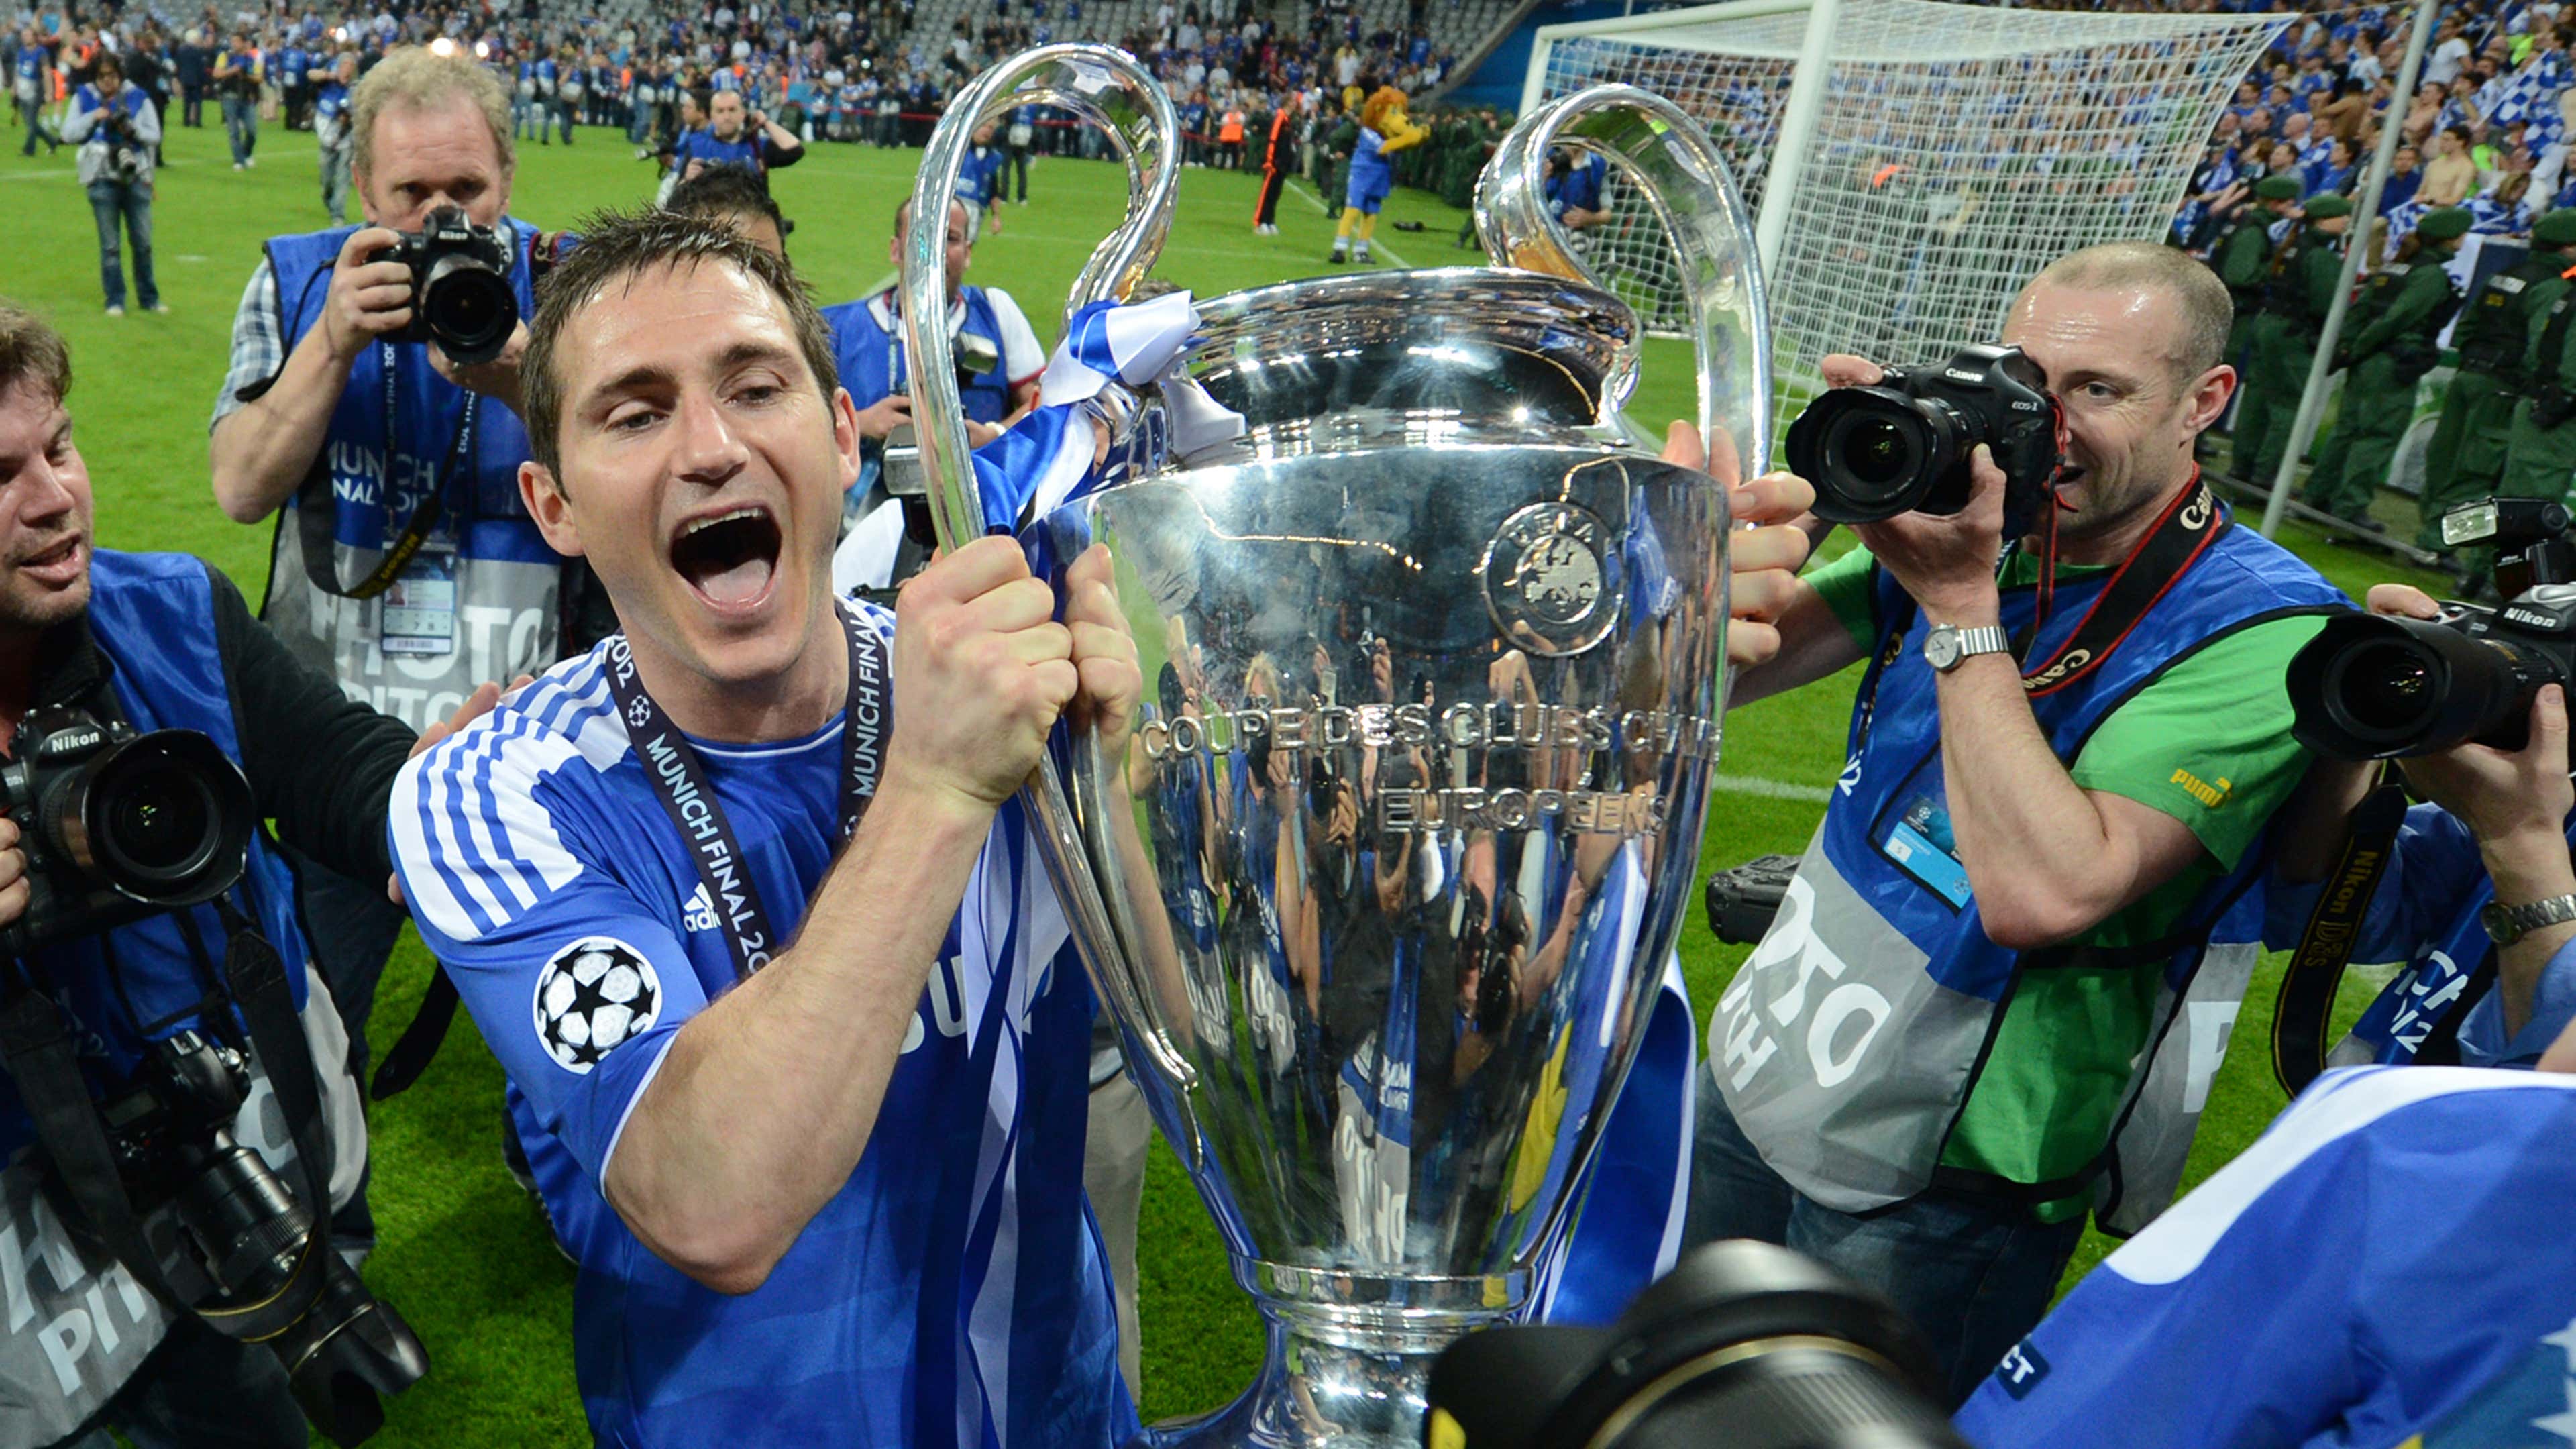 UEFA Champions League Dream Final: Win your perfect final package, UEFA Champions  League